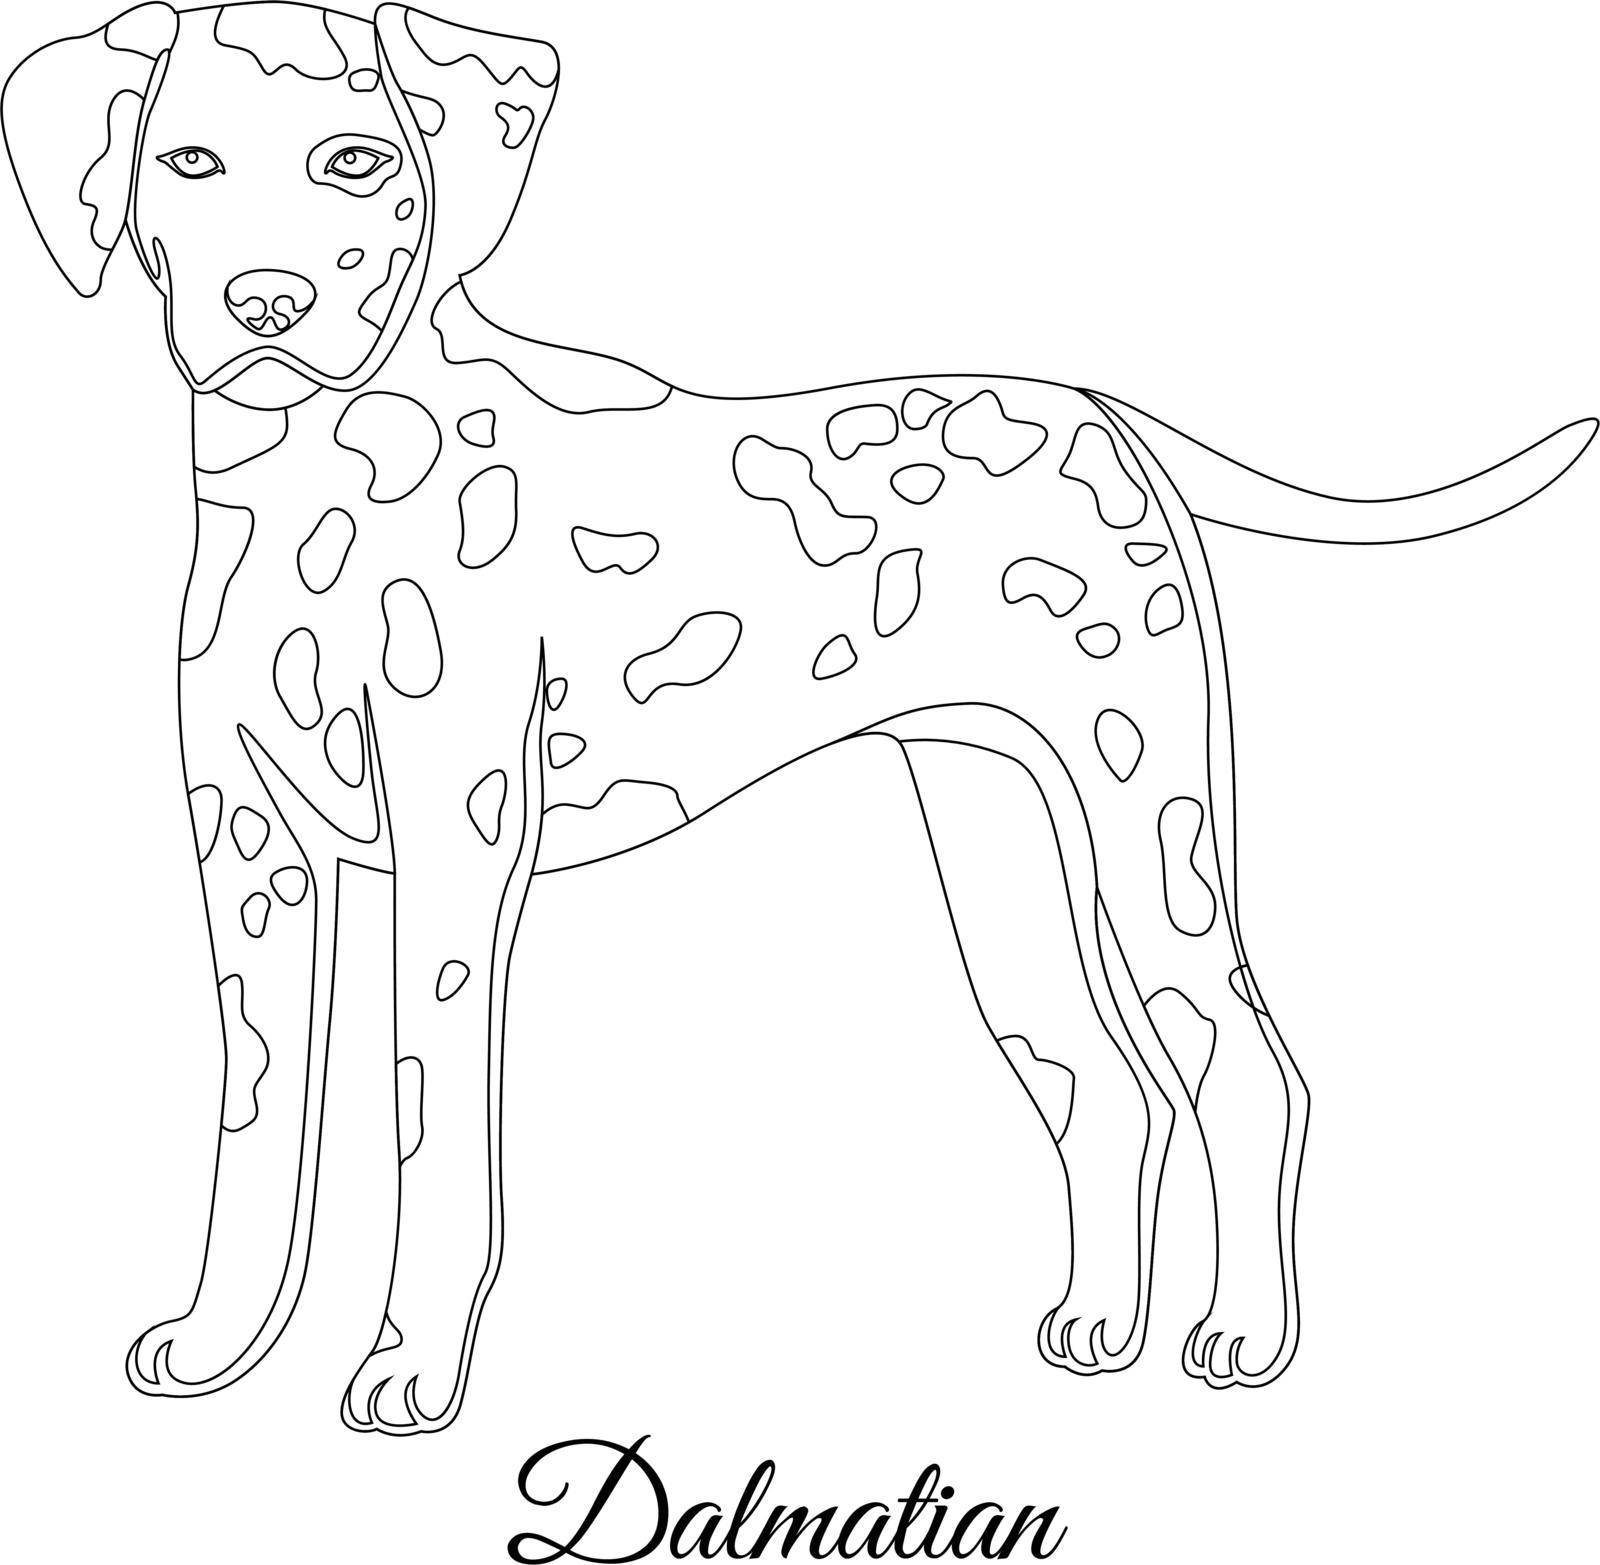 Dalmatian dog outline by Marishkayu